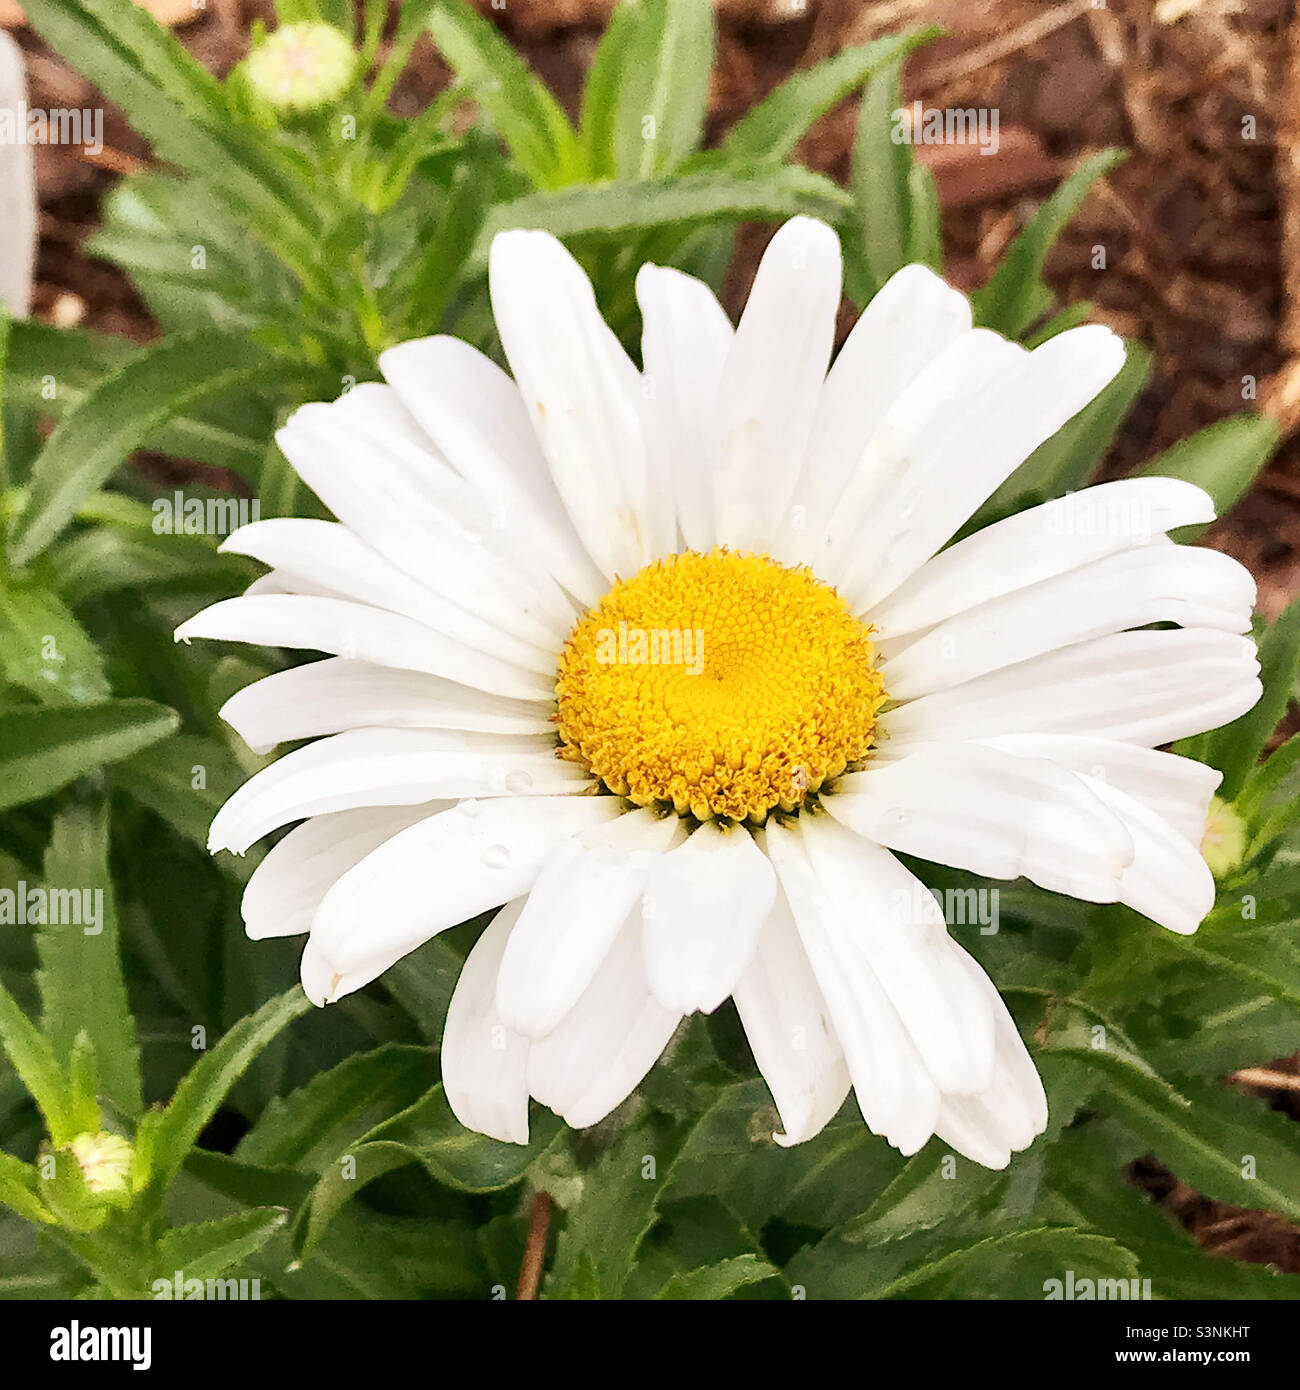 A single daisy flower blossom. Stock Photo